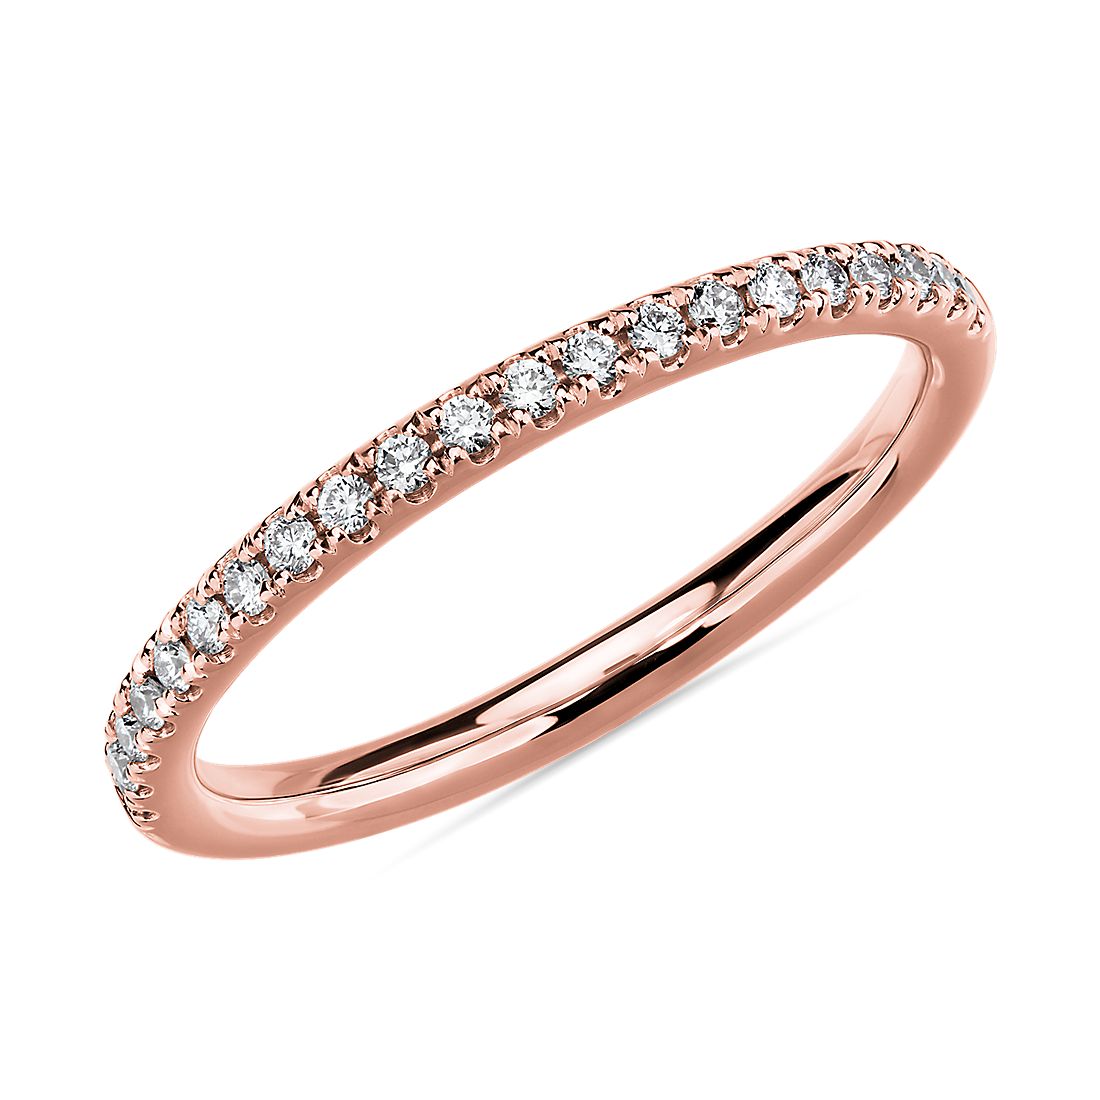 Riviera Pavé Diamond Ring in 14k Rose Gold (1/6 ct. tw.)